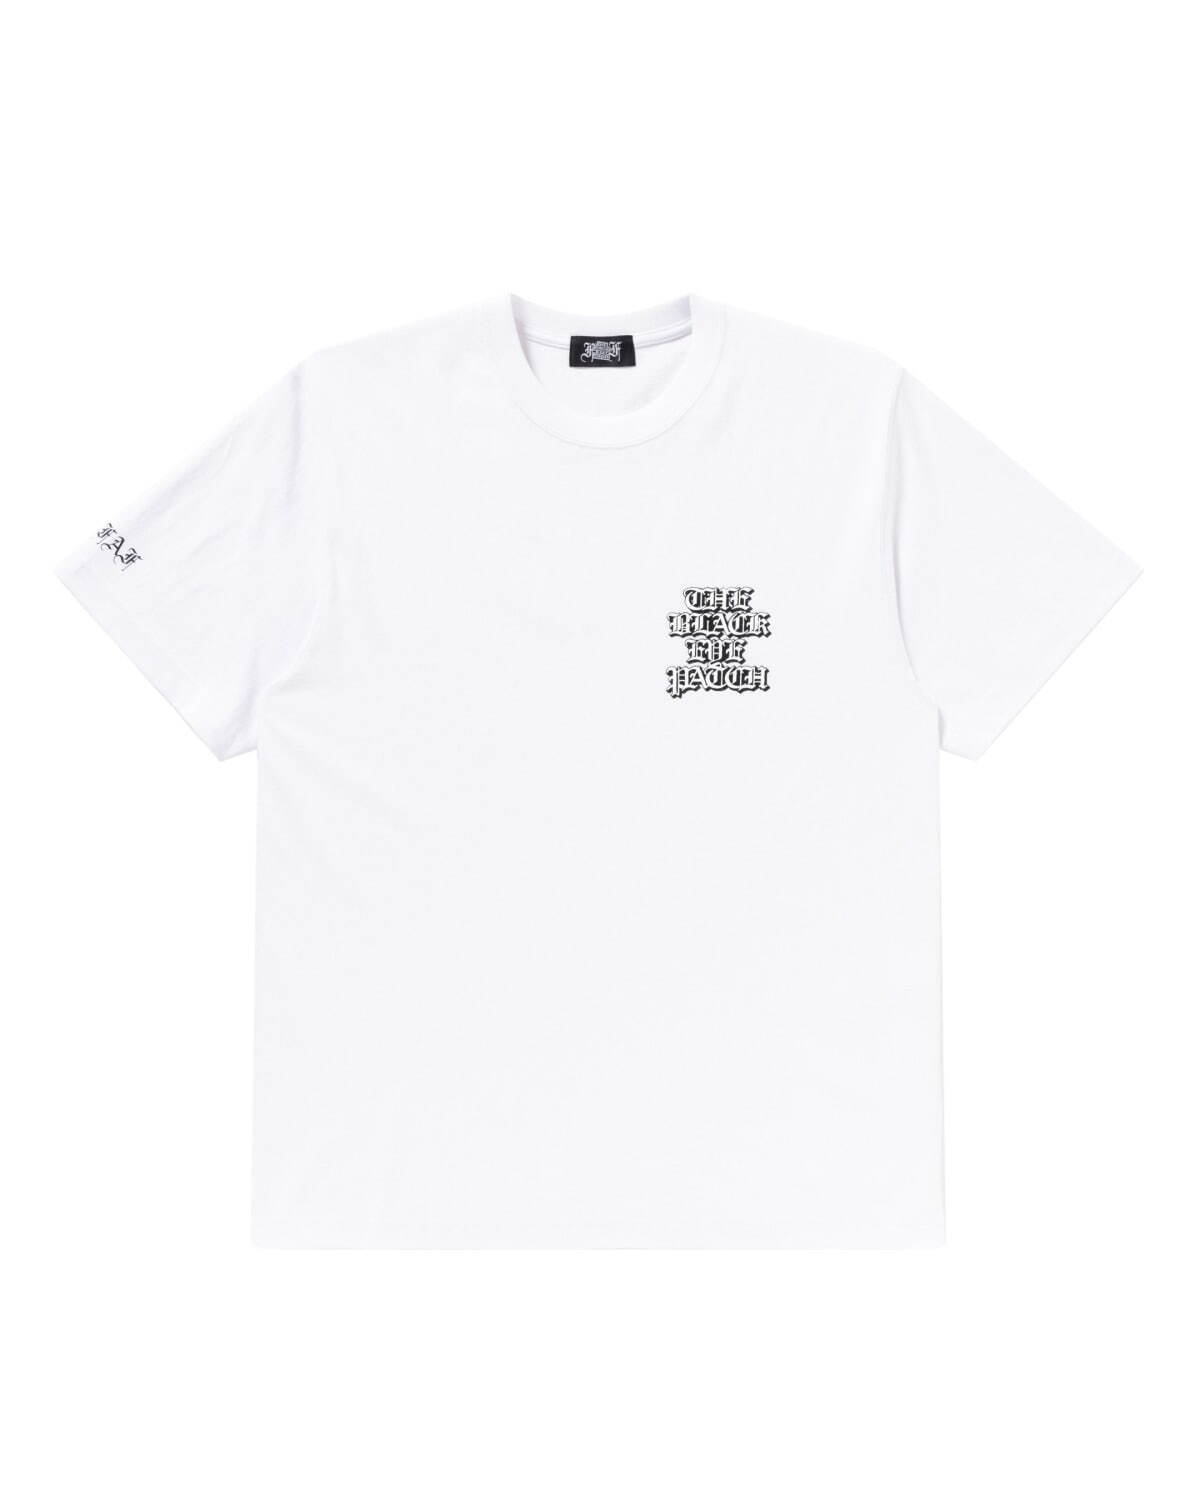 Tシャツ 8,800円